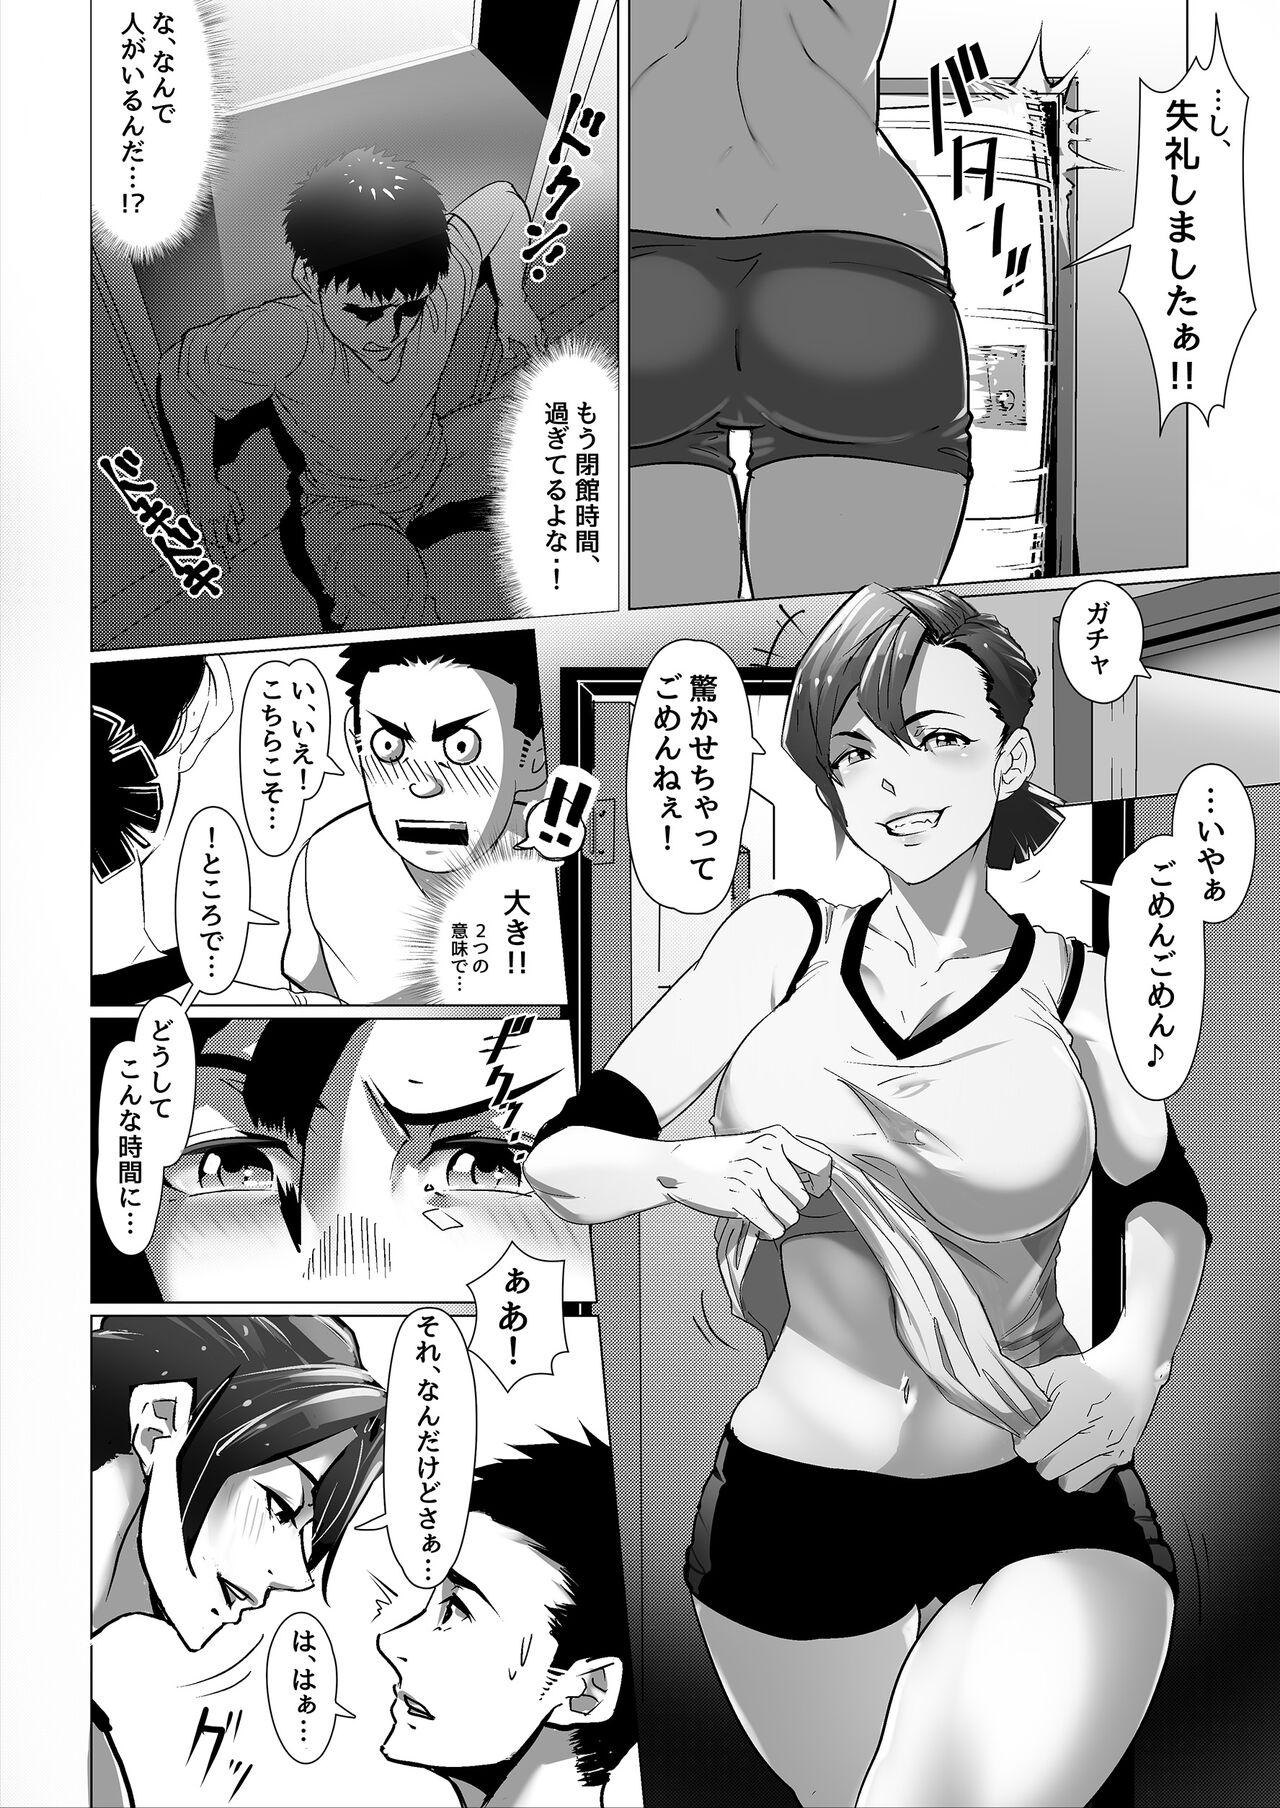 [Koda1ra] Lucky Happening - Women's Volleyball - Vol 3 3